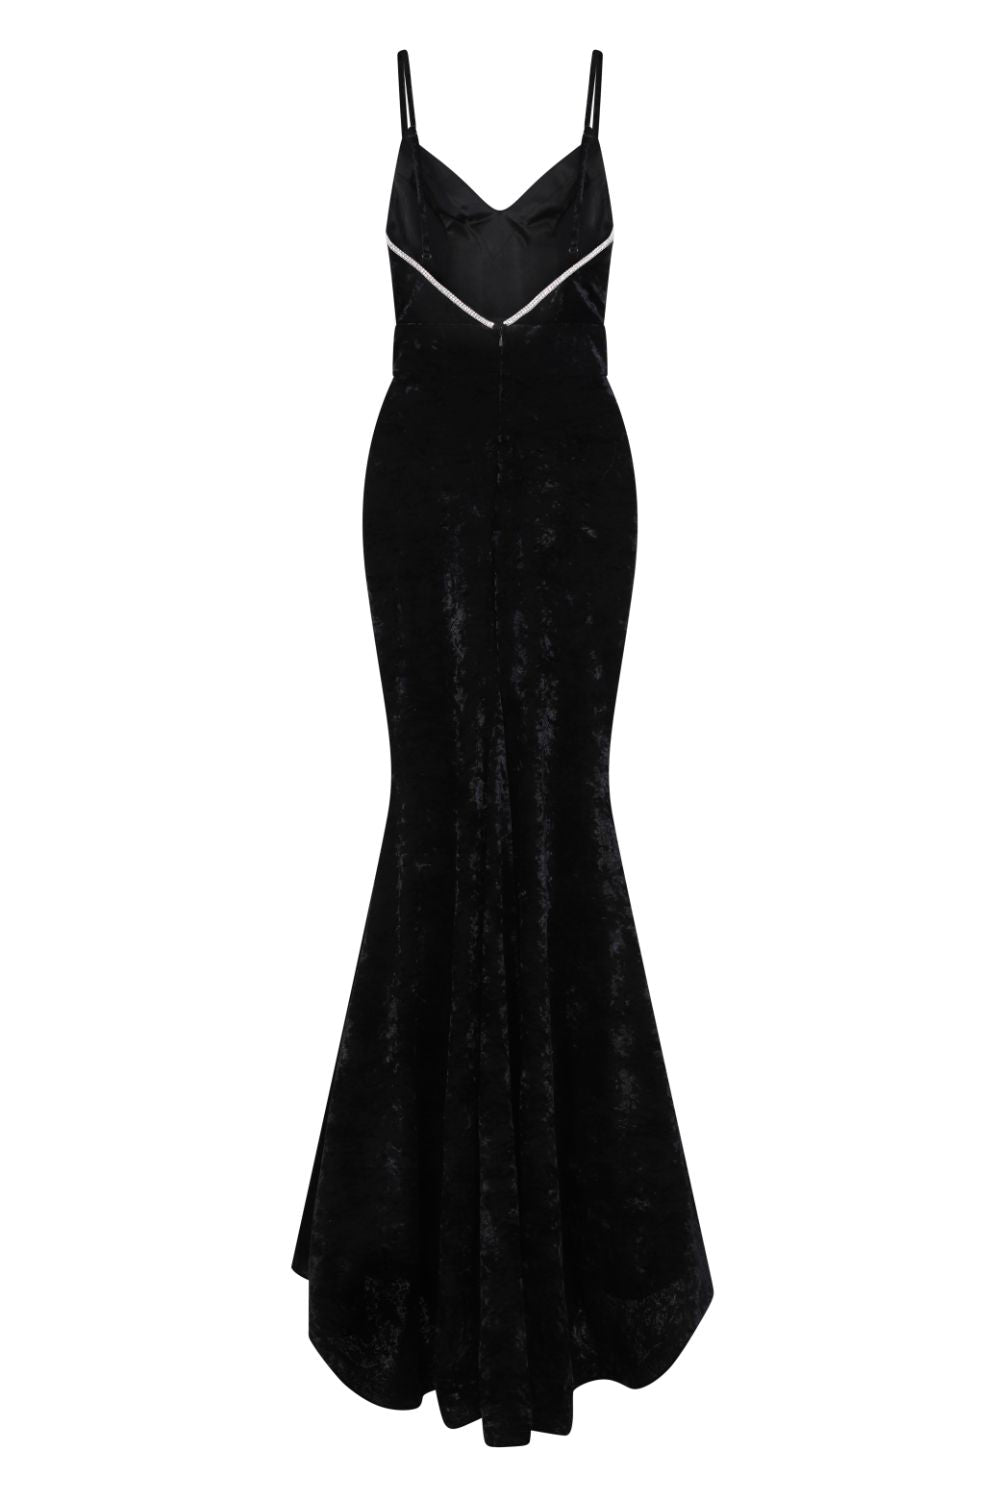 Irreplaceable Luxe Black Velvet Crystal Sweetheart Fishtail Gown